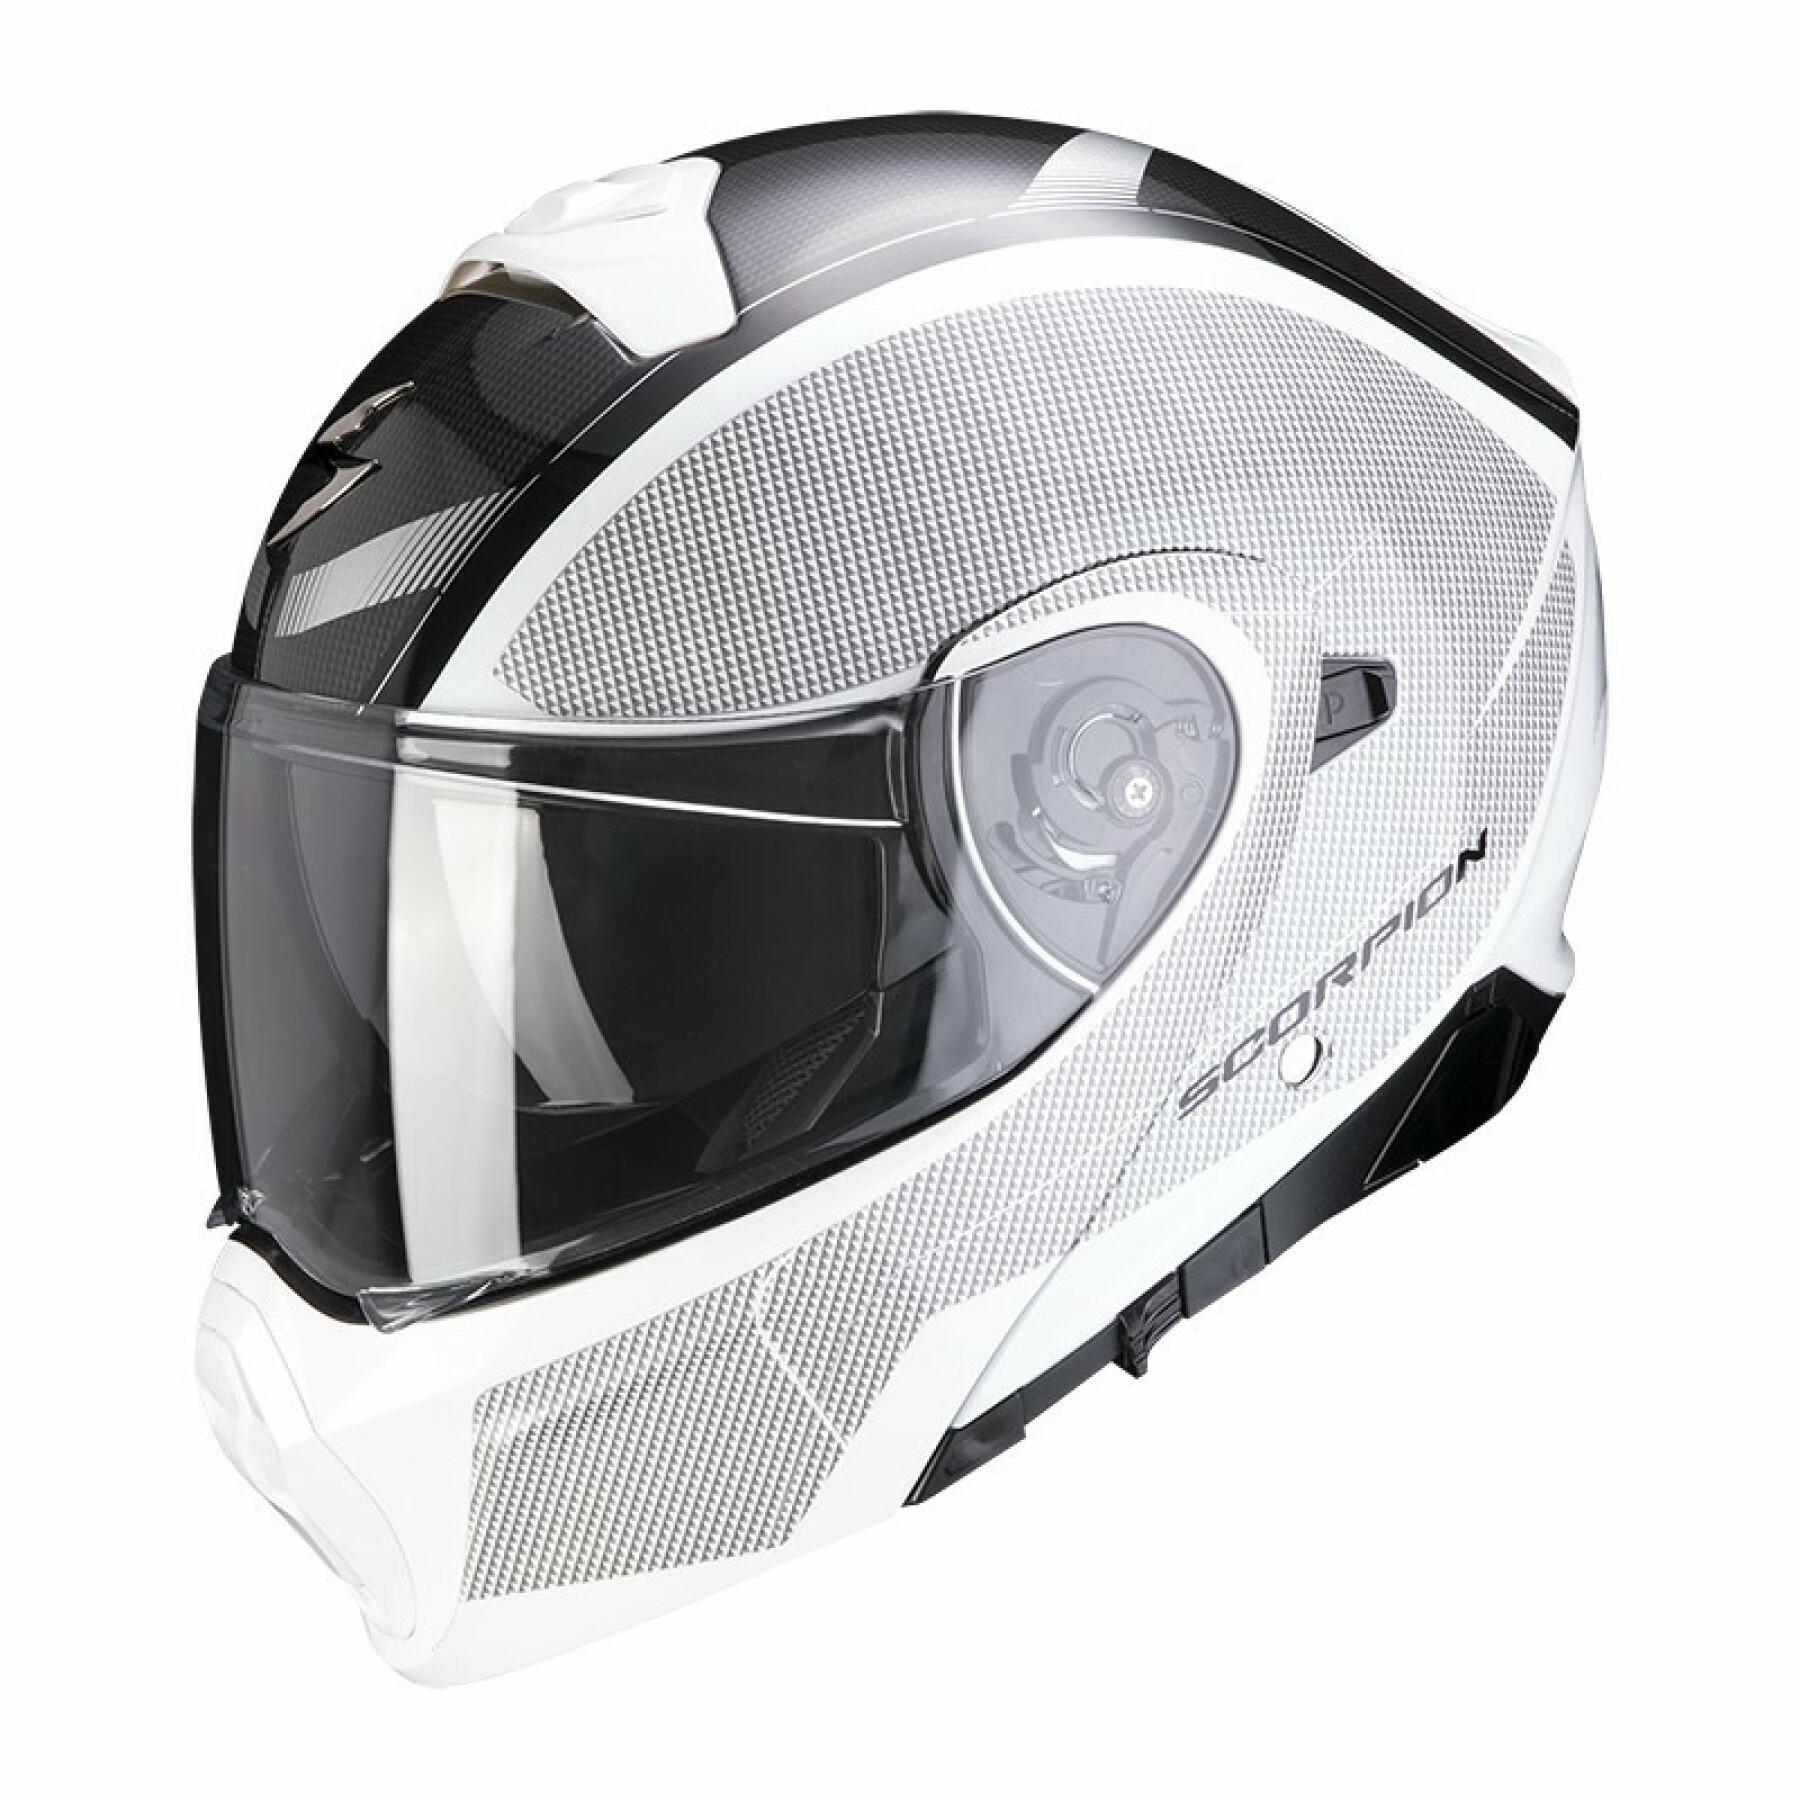 Modular helmet Scorpion Exo-930 CIELO